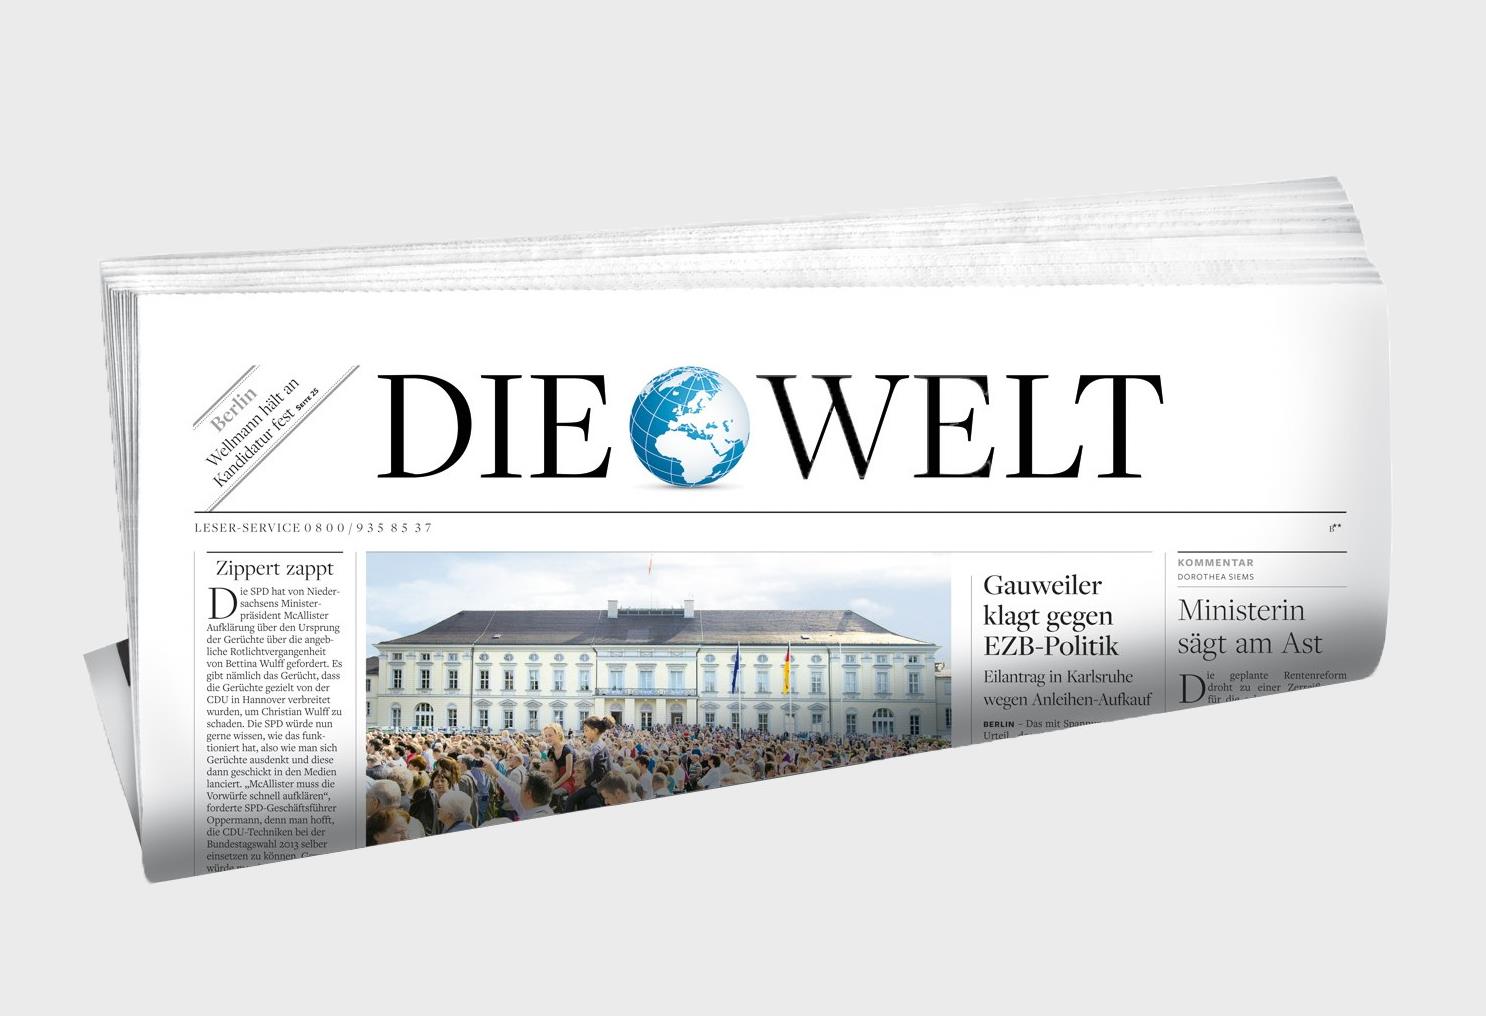 Die Welt: Επιμένει στην ύπαρξη της έκθεσης της γερμανικής πρεσβείας